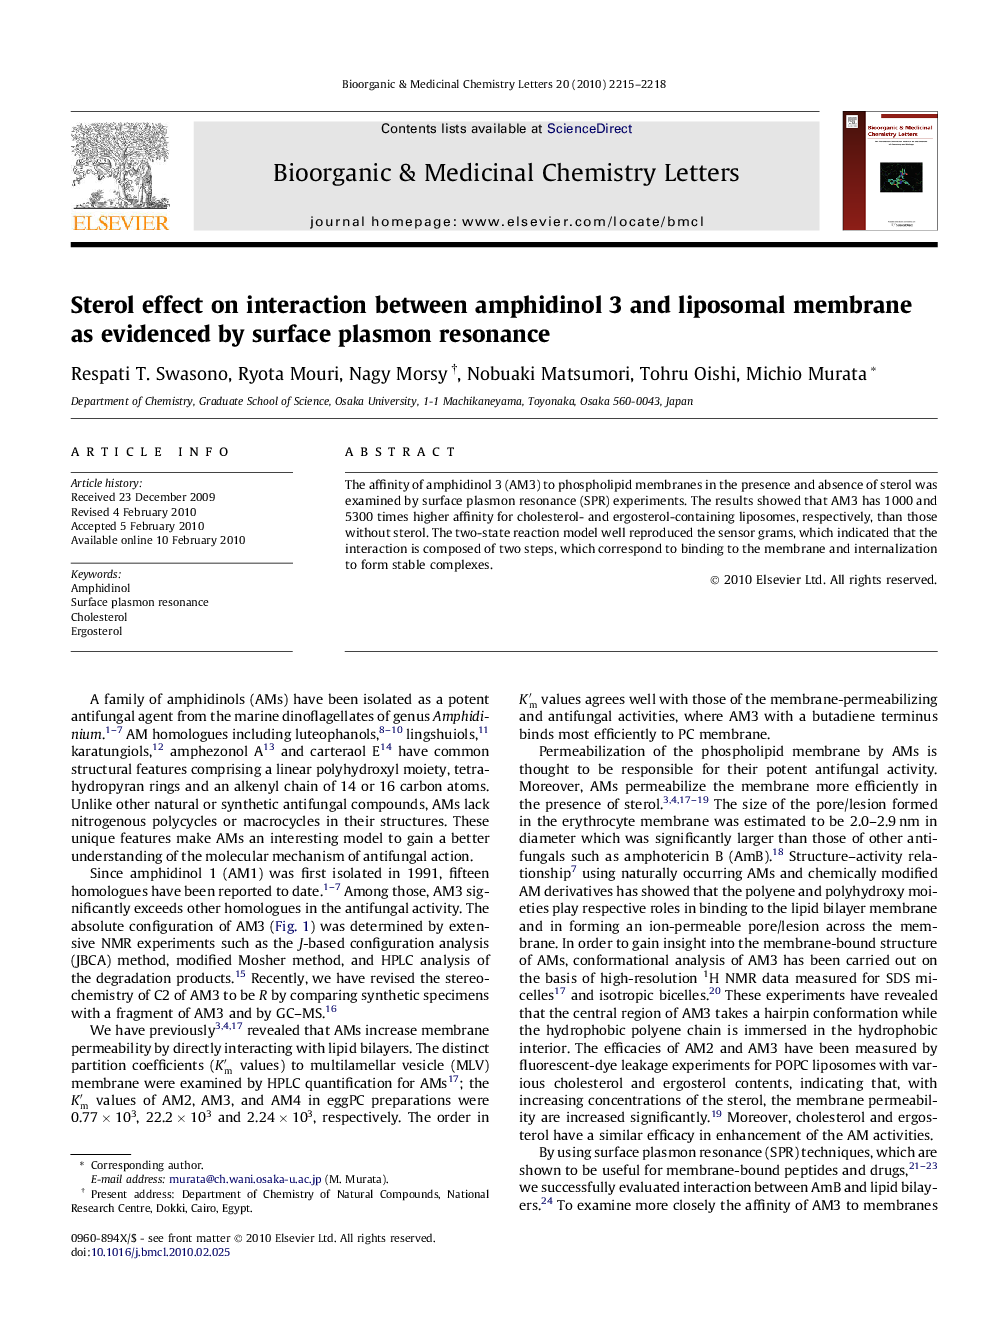 Sterol effect on interaction between amphidinol 3 and liposomal membrane as evidenced by surface plasmon resonance